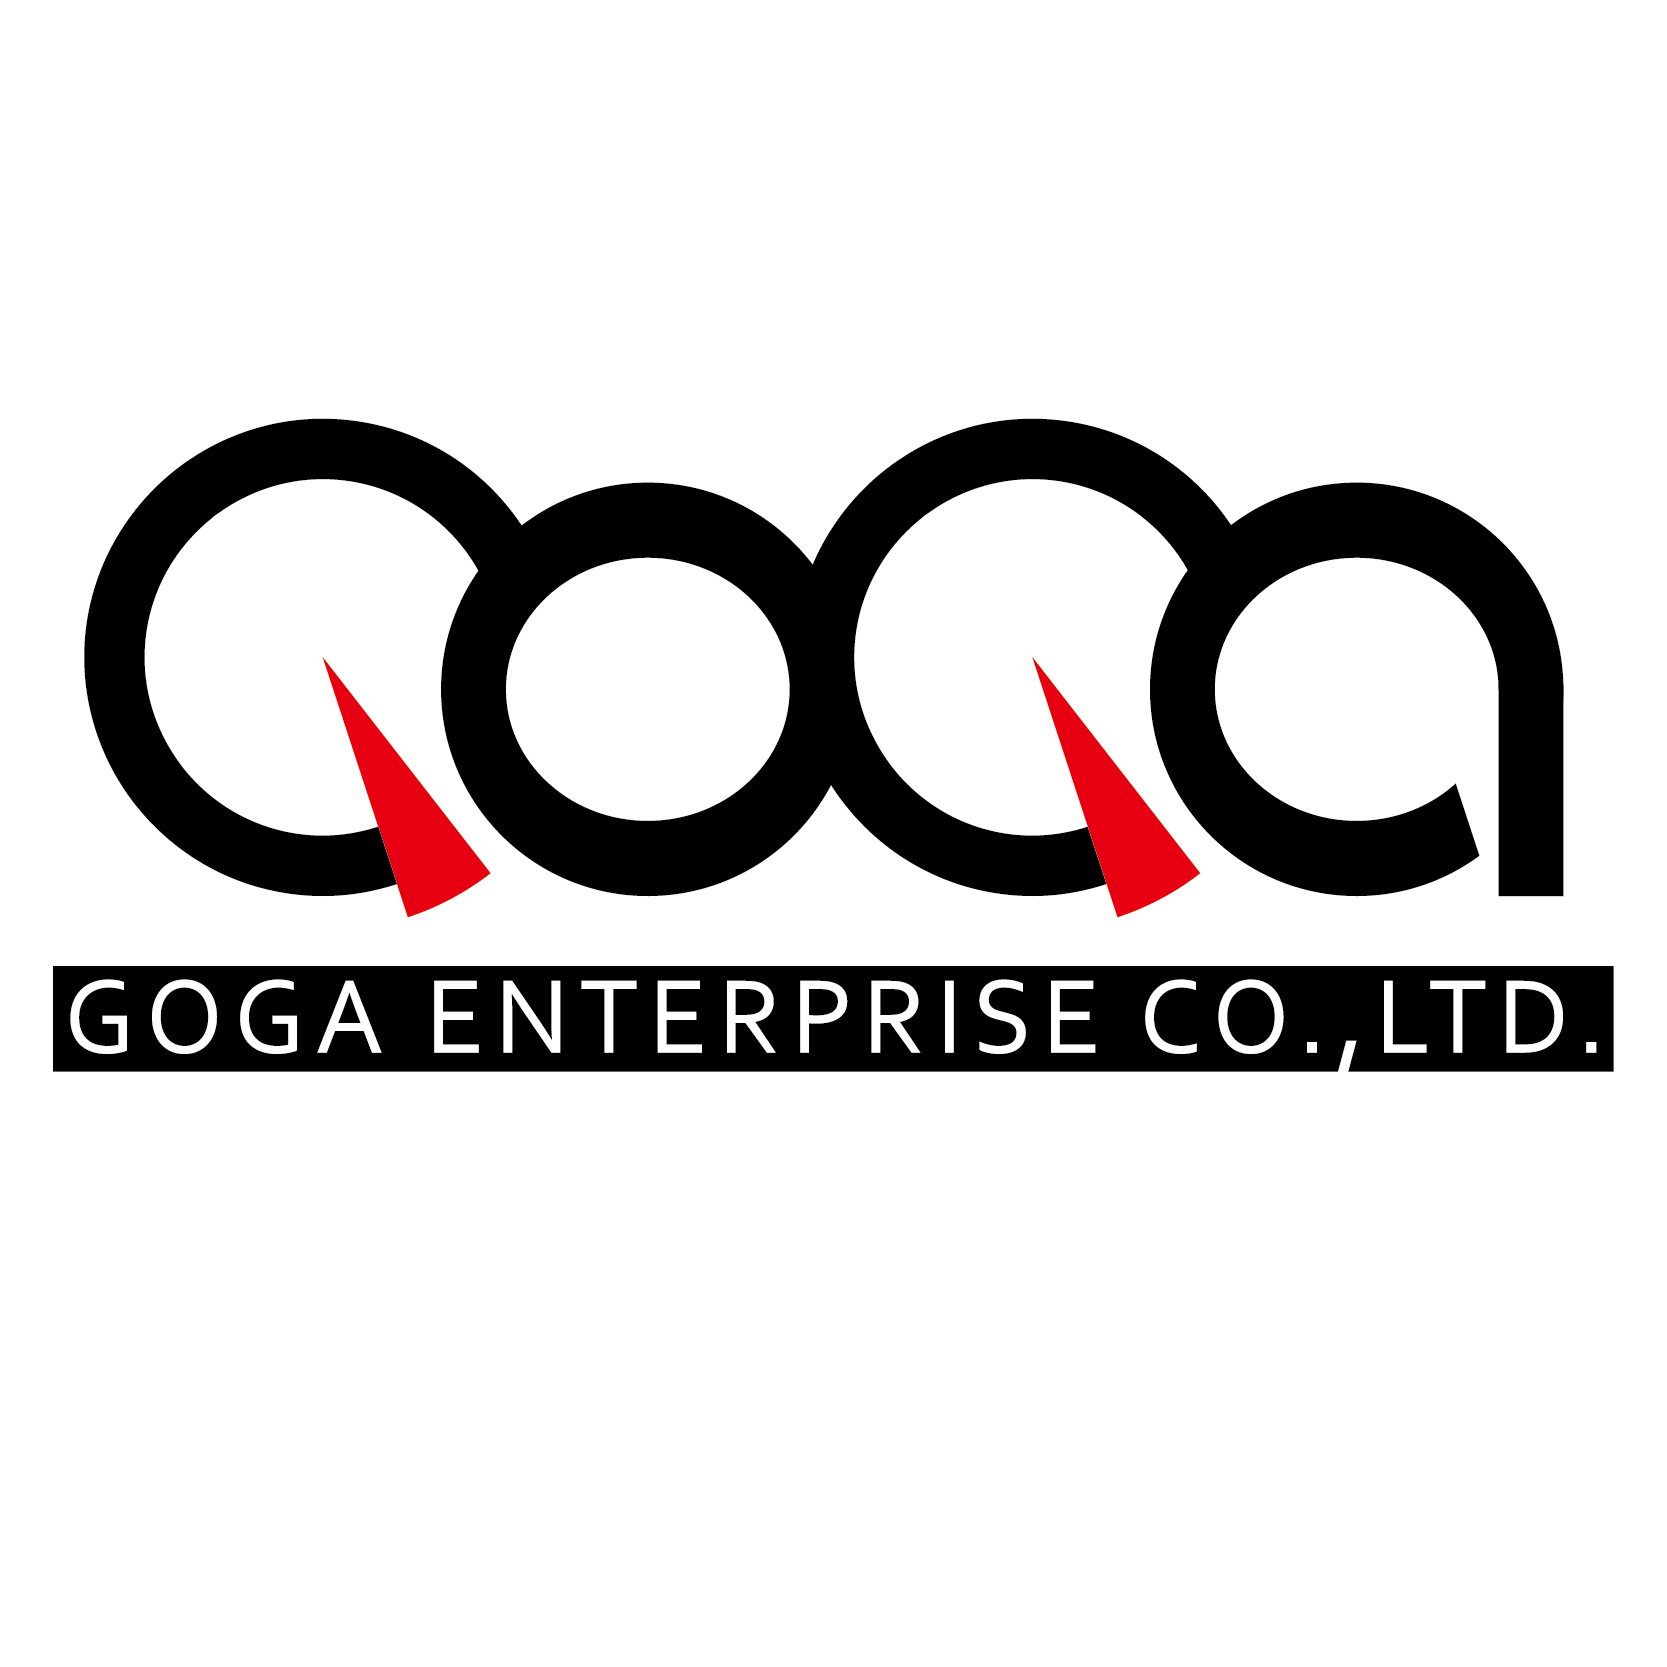 Goga Enterprise Co., Ltd.